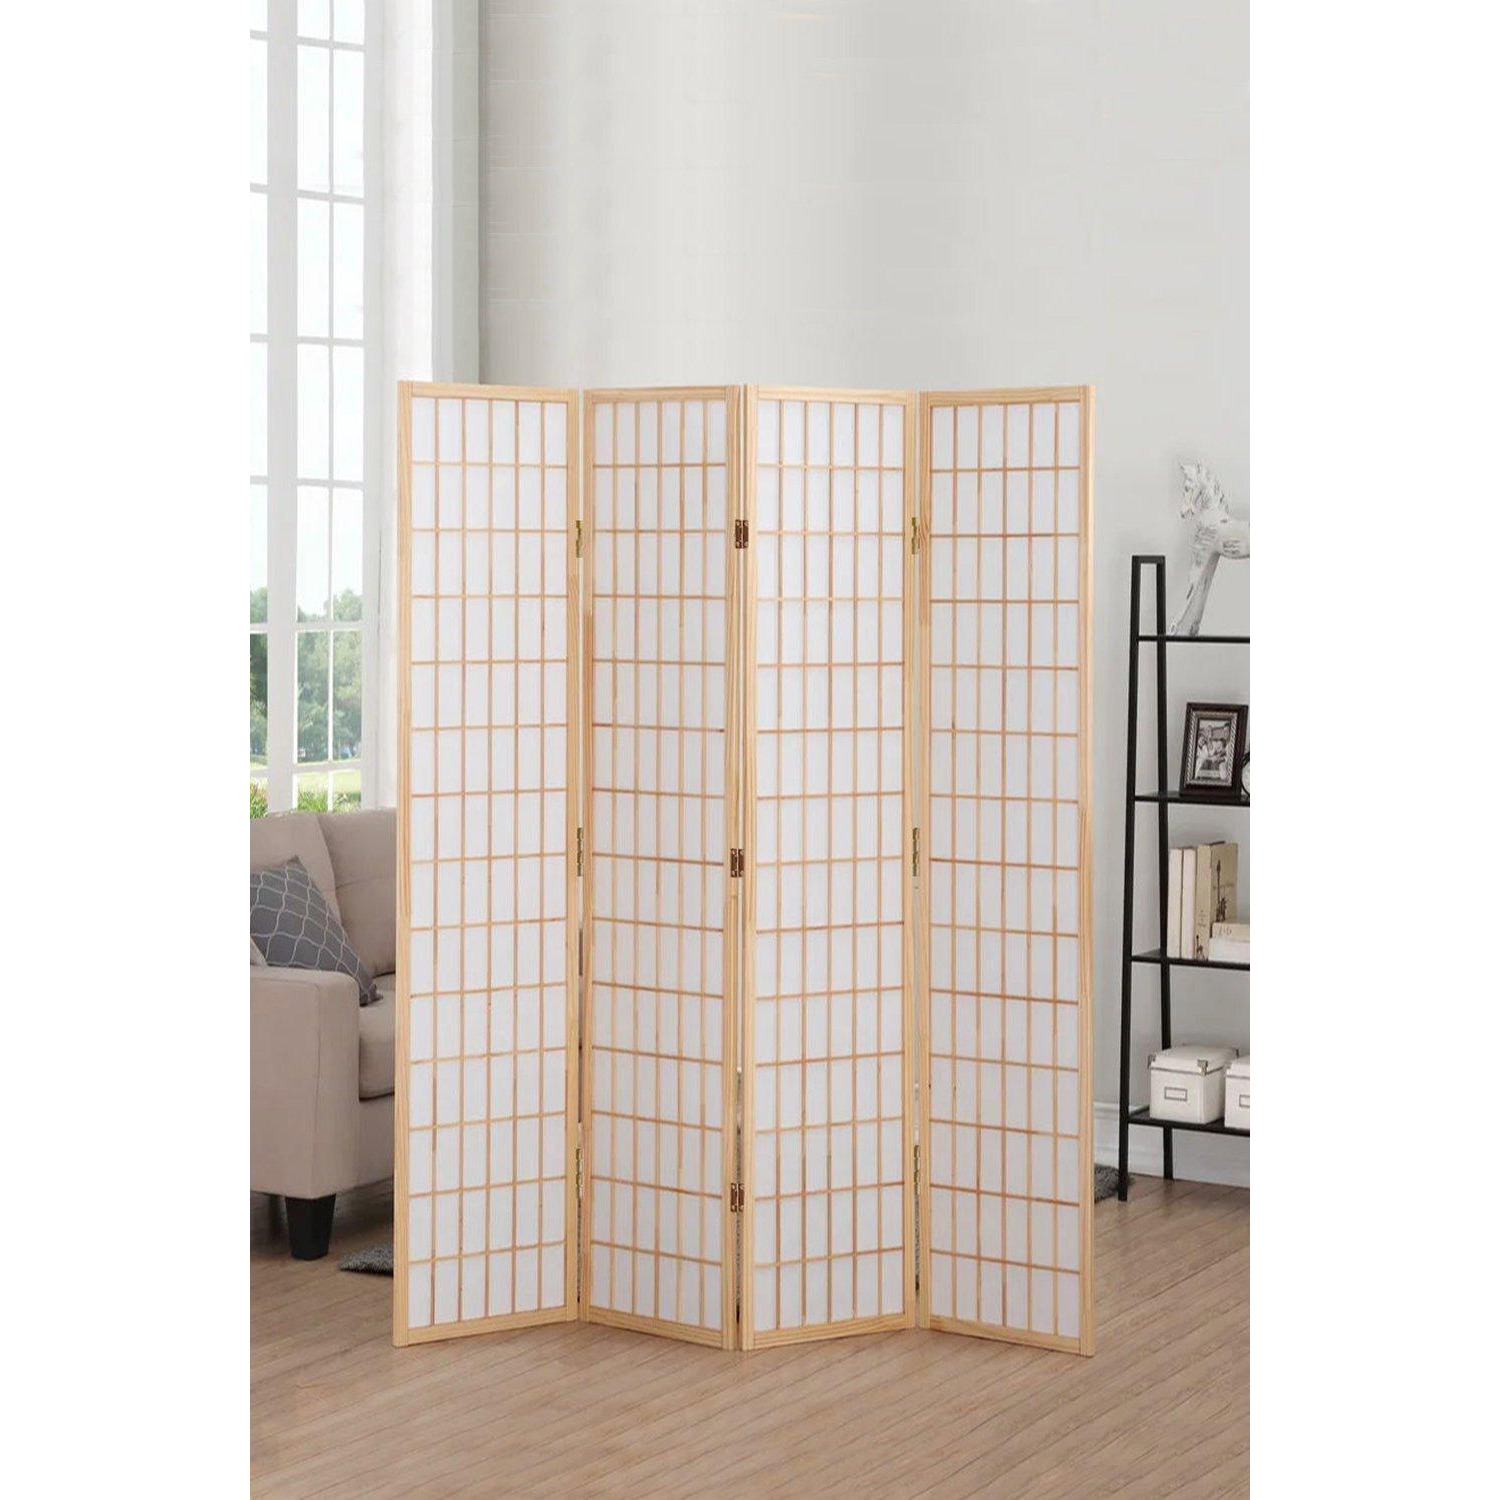 4-Panel Natural Solid Wood Folding Room Divider Screen - image 1